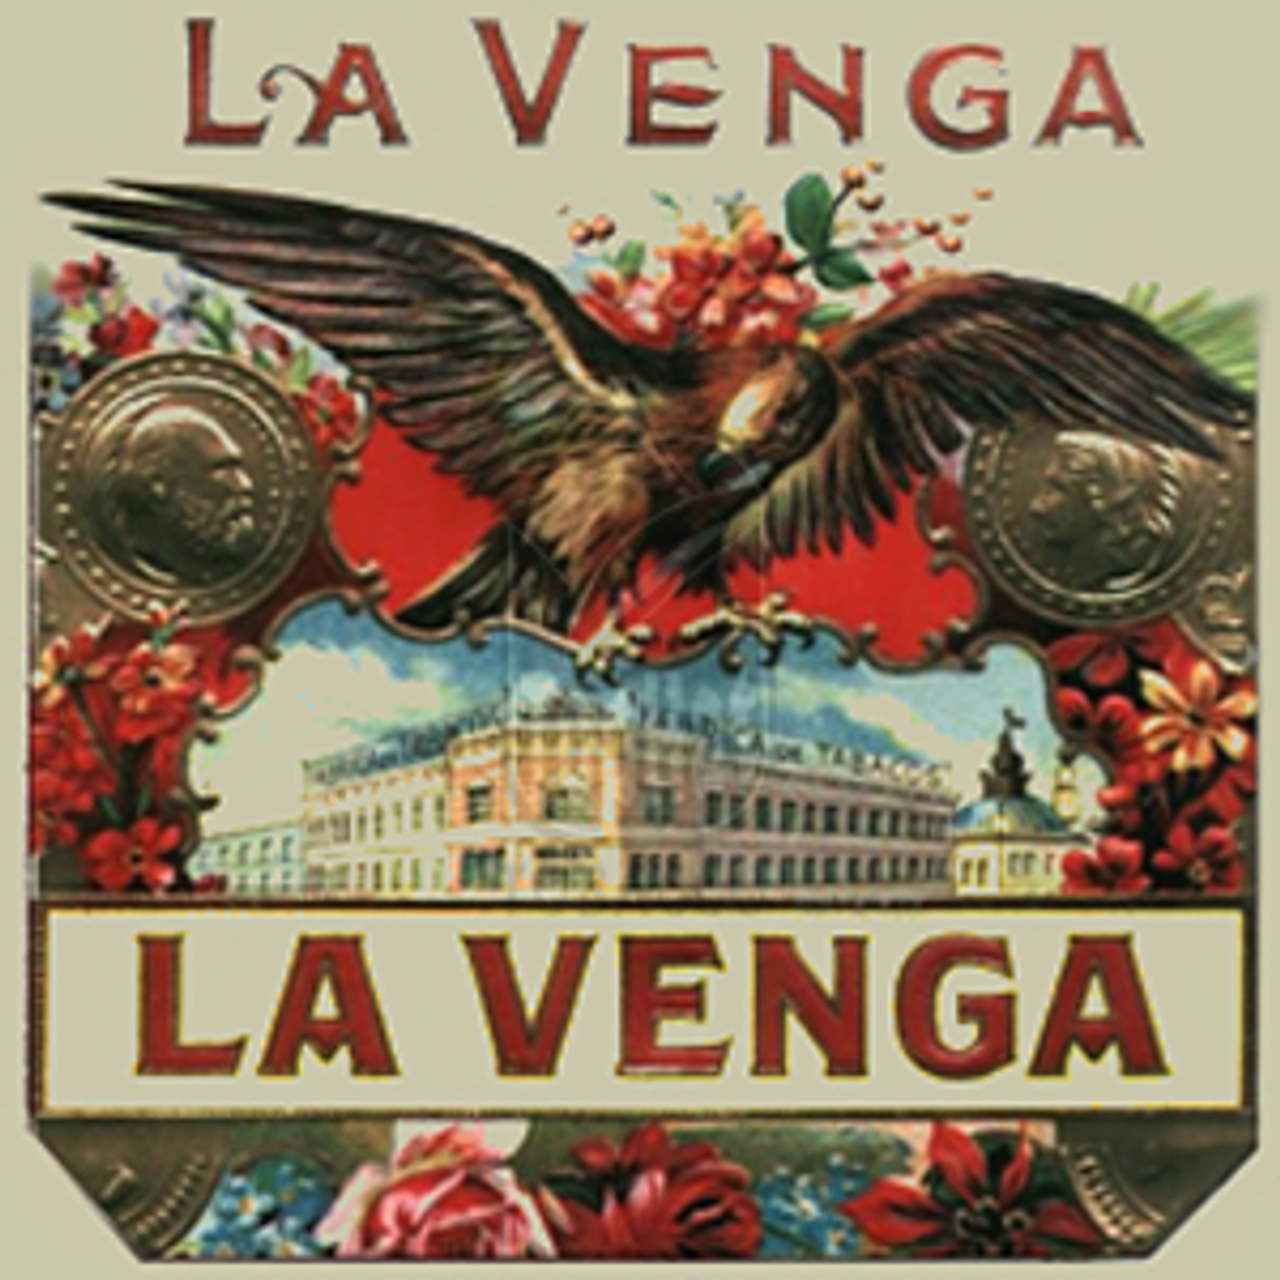 La Venga Logo